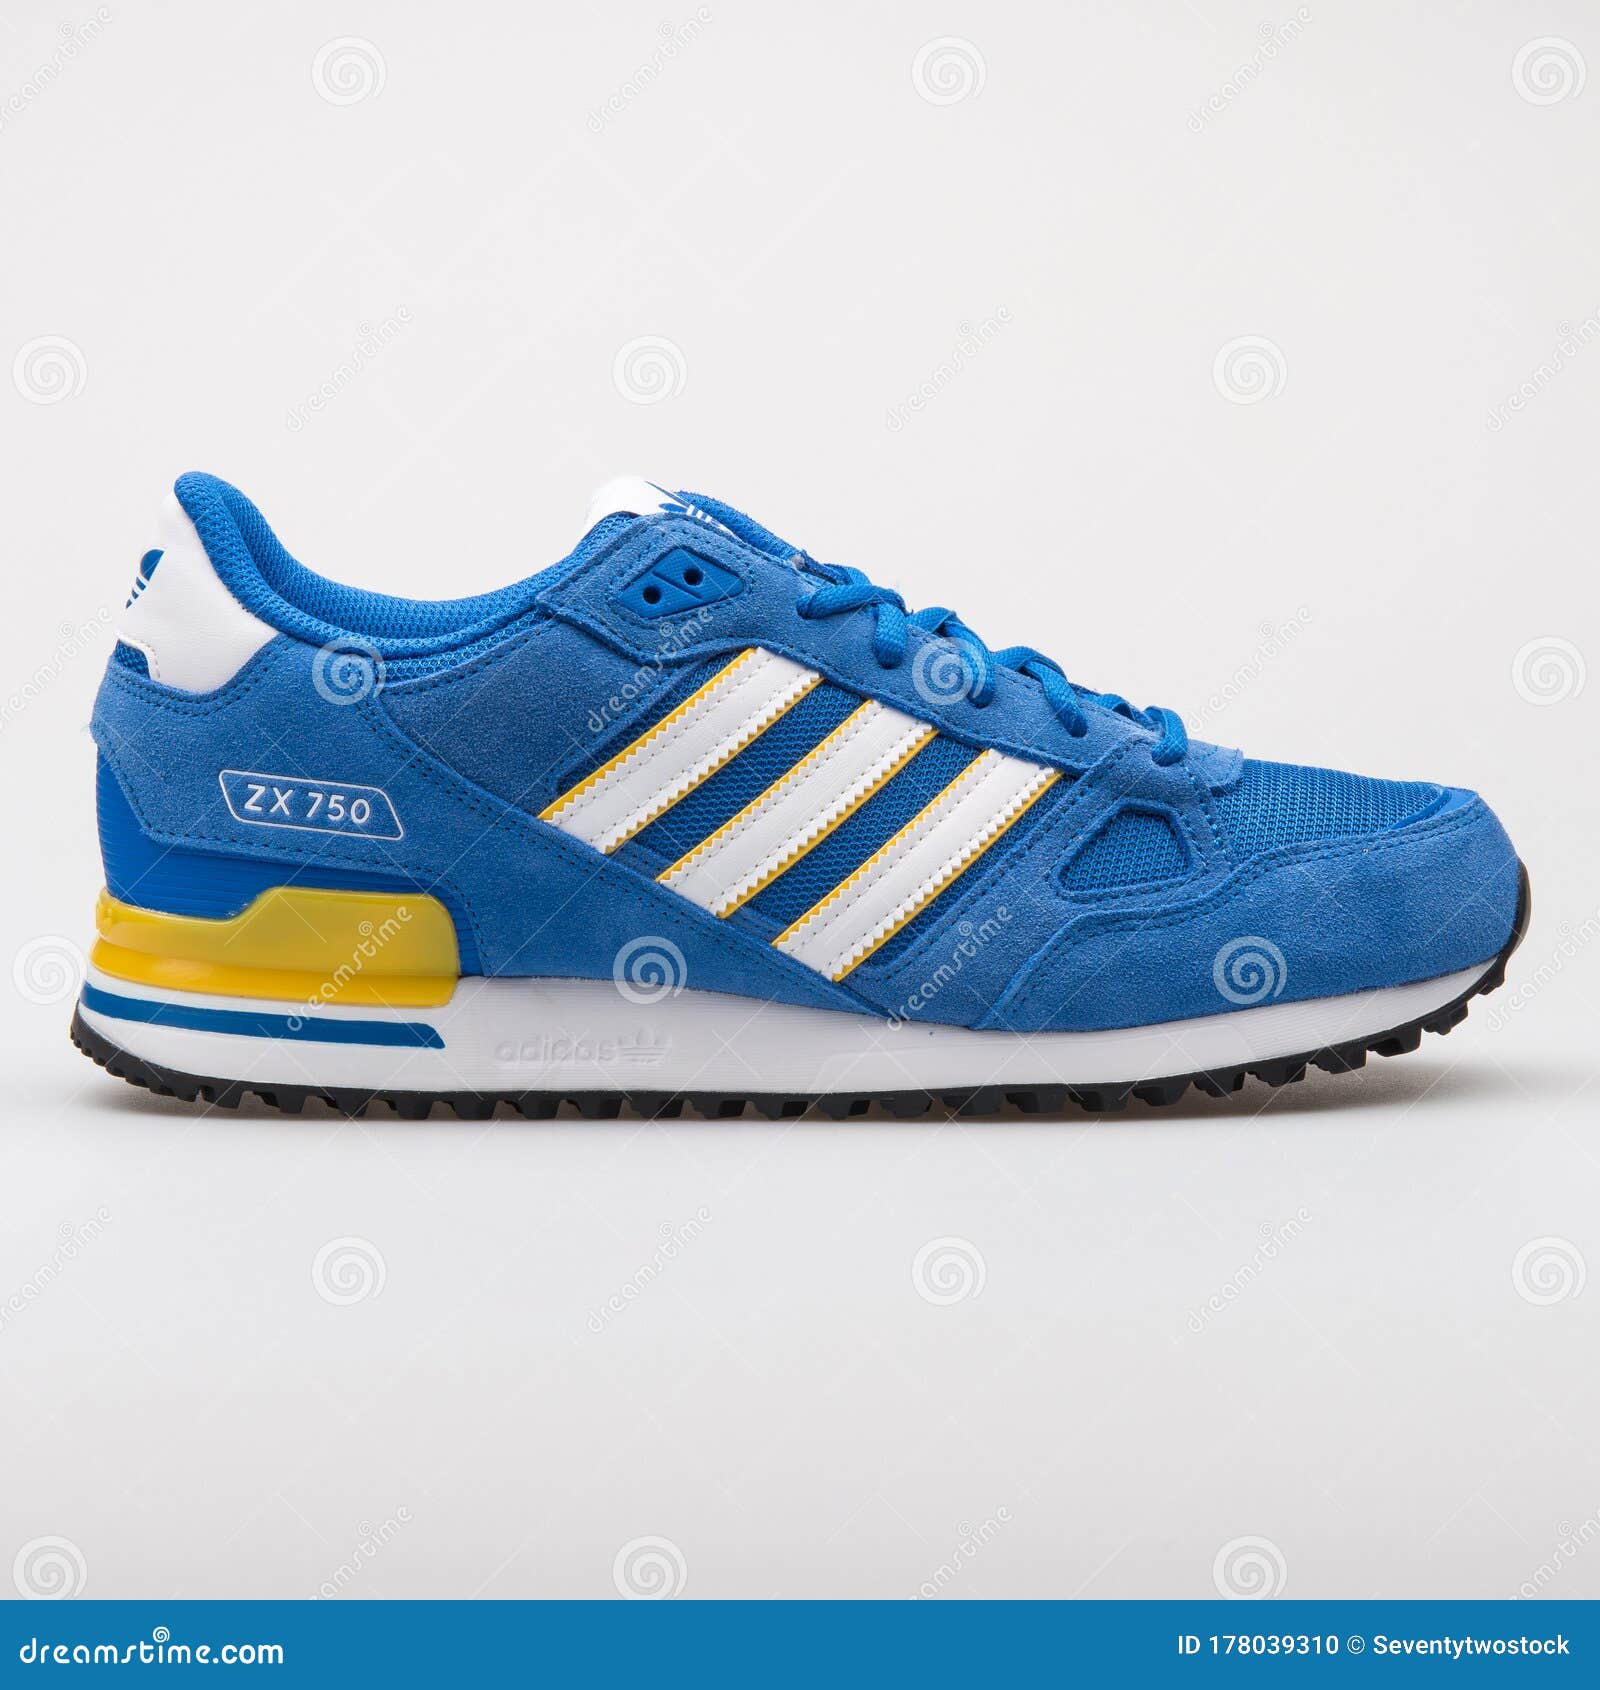 adidas zx blue yellow